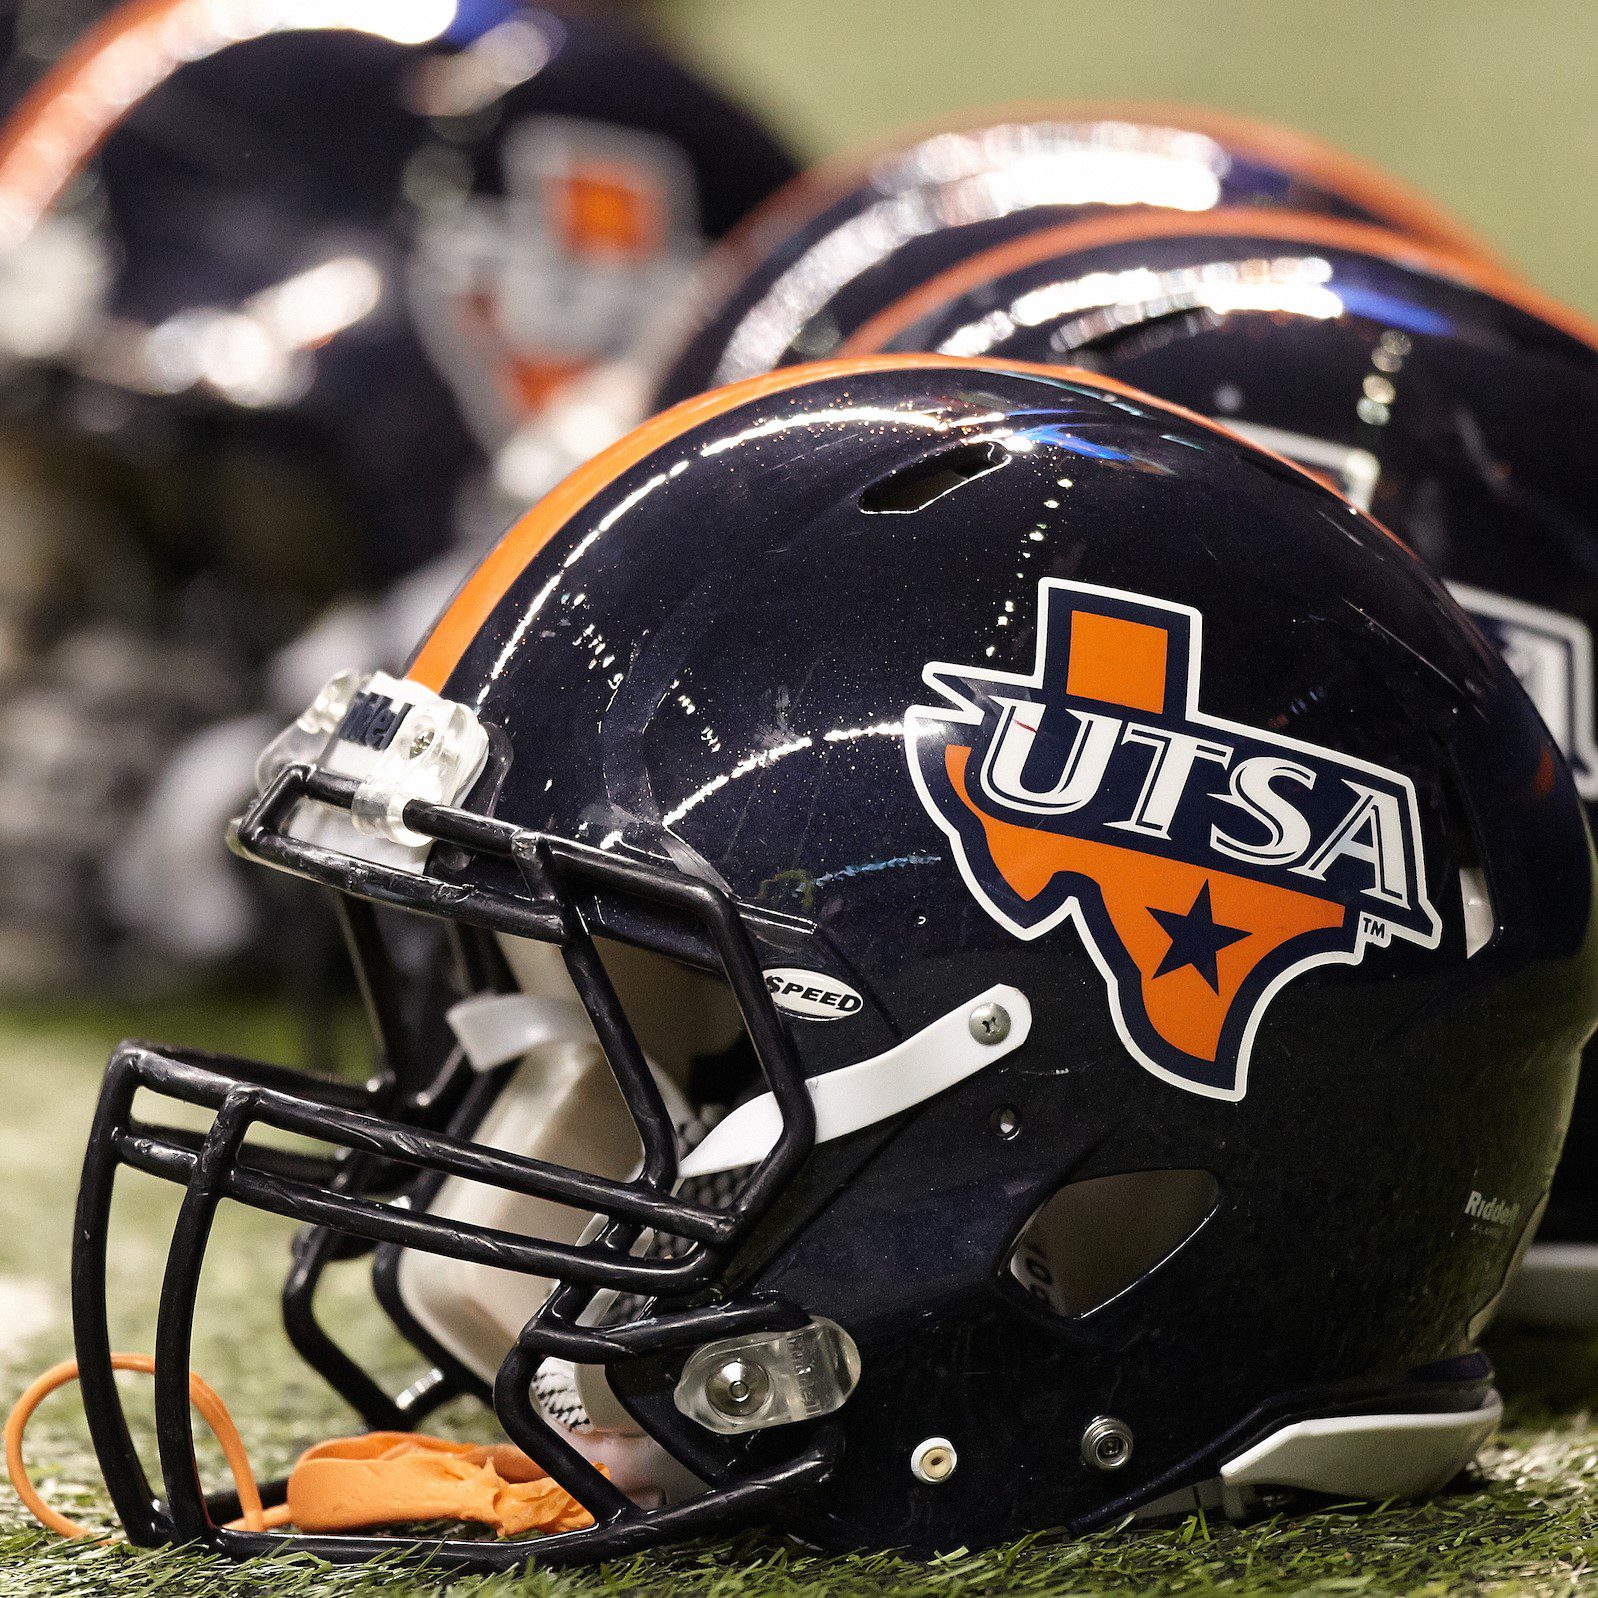 New TV Network Adding More UTSA Football and Texas Affiliates